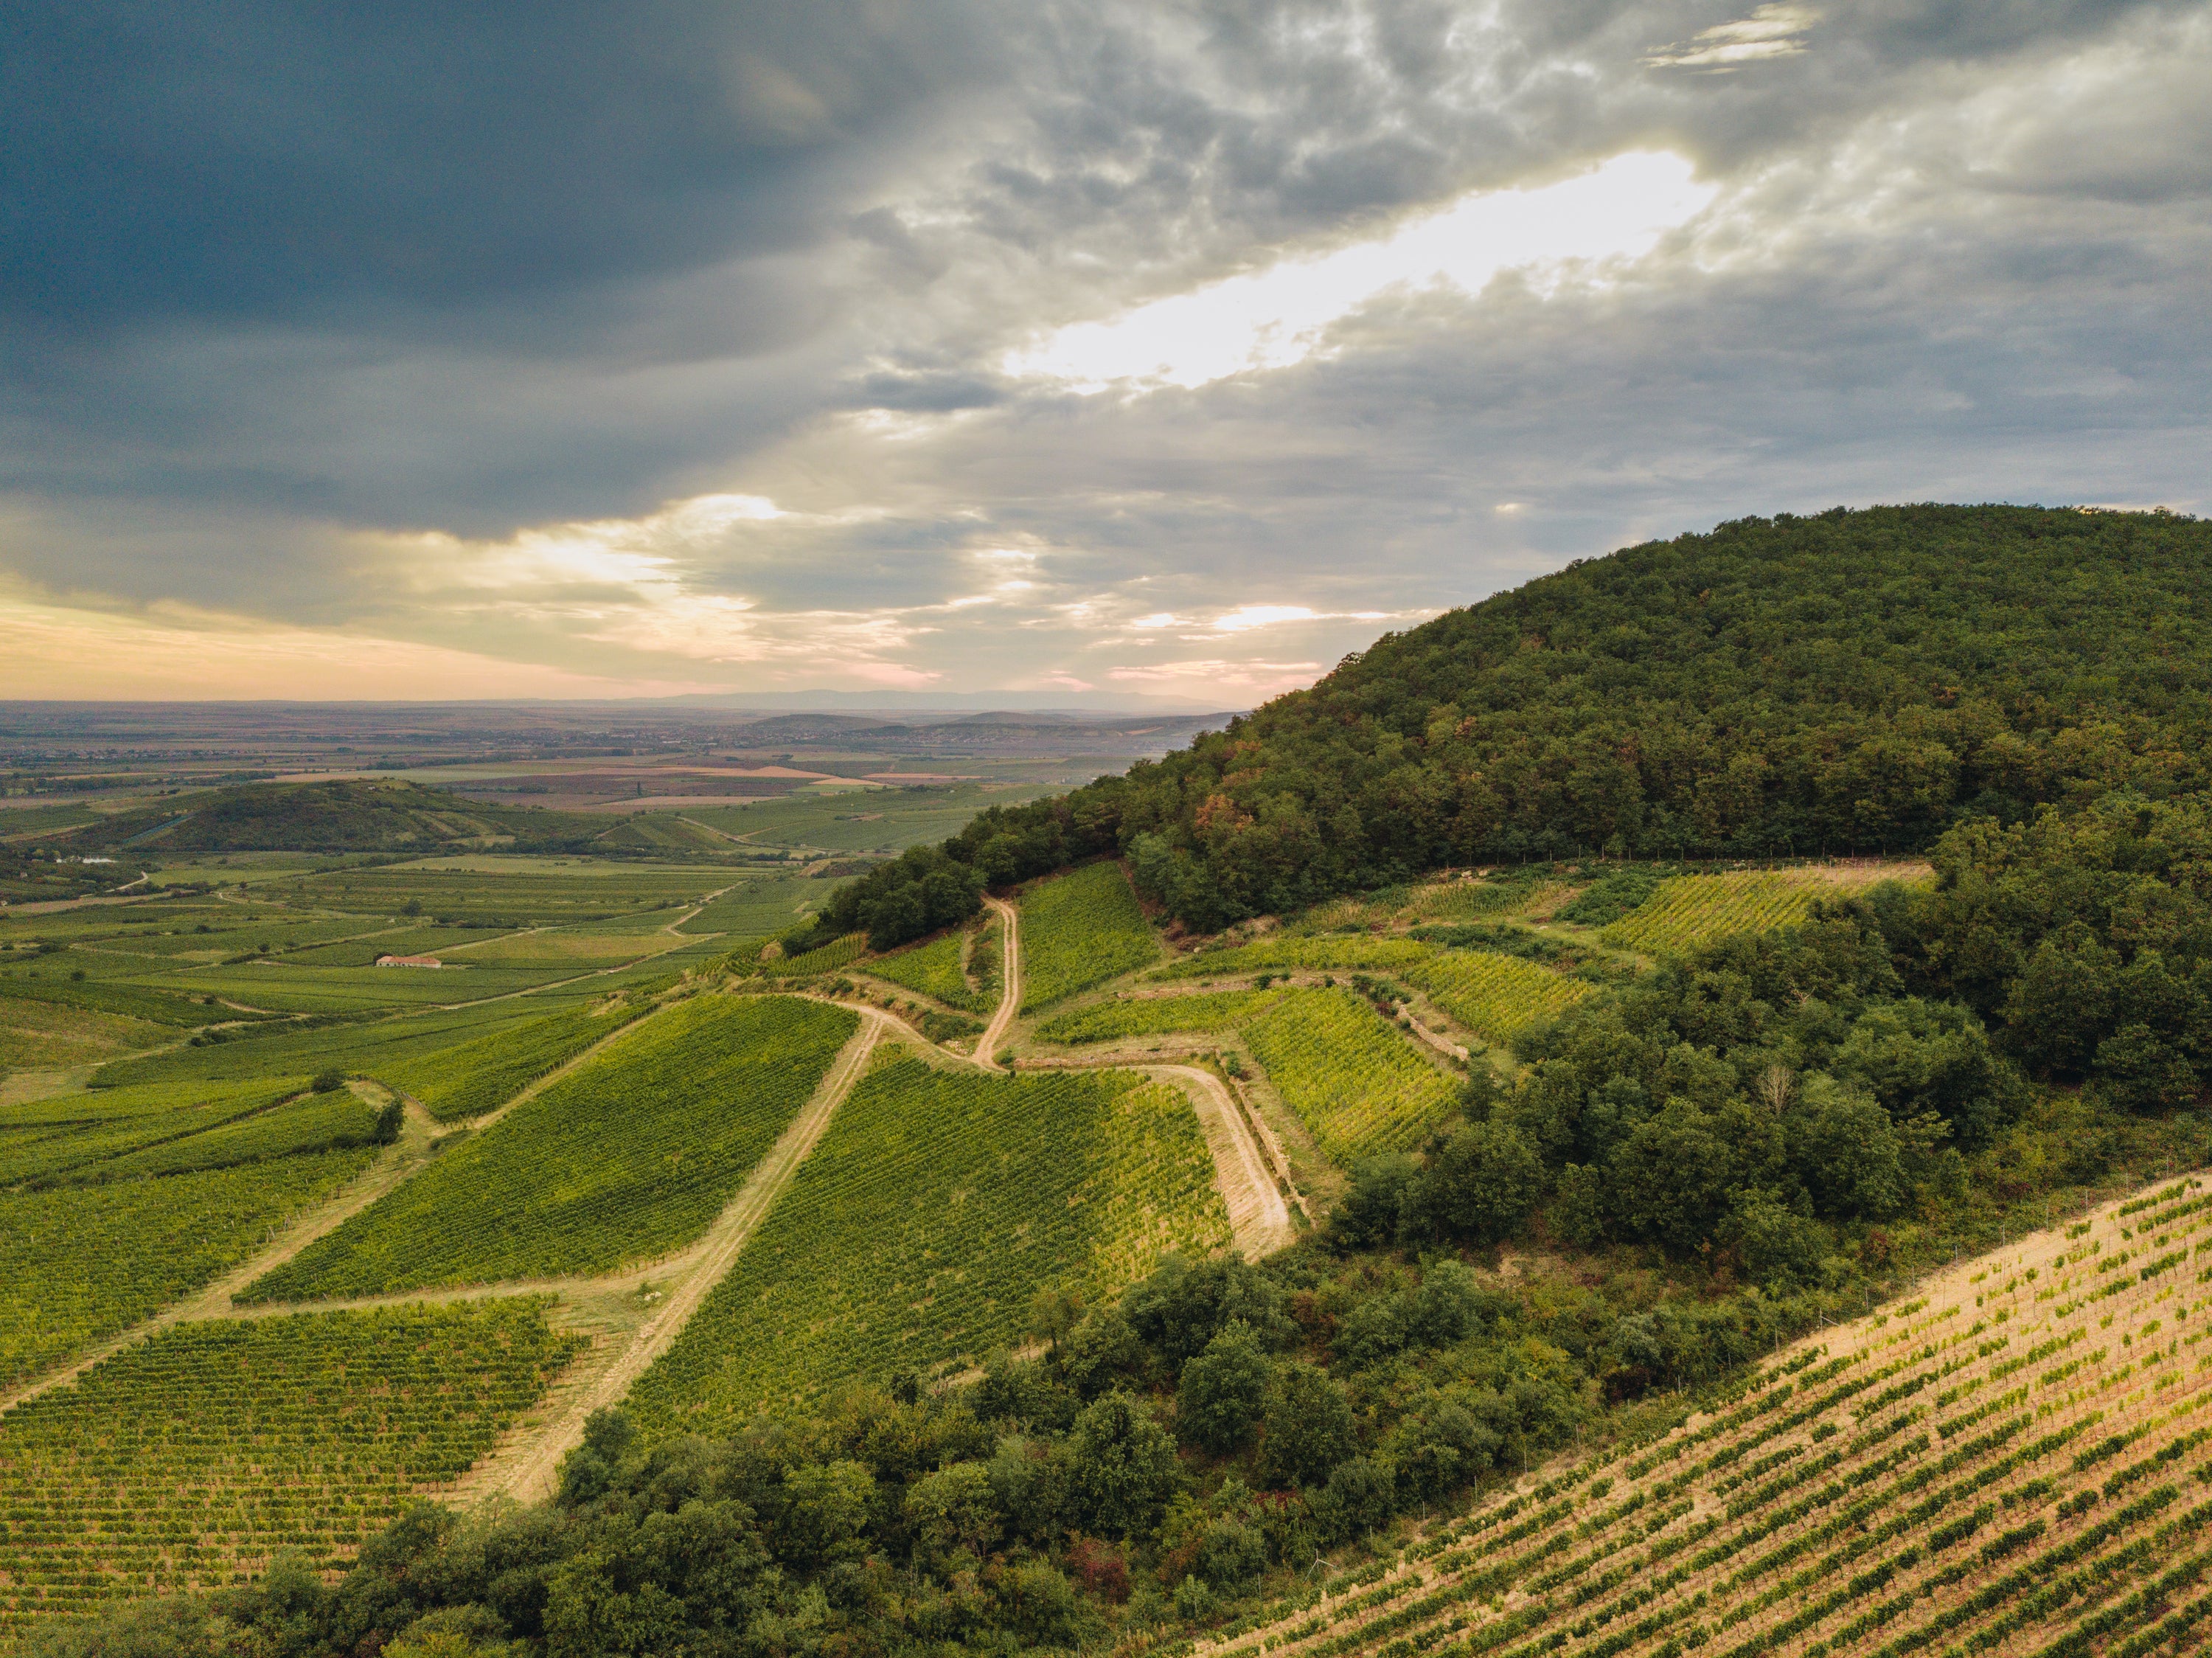 Mád one of the wine-growing regions